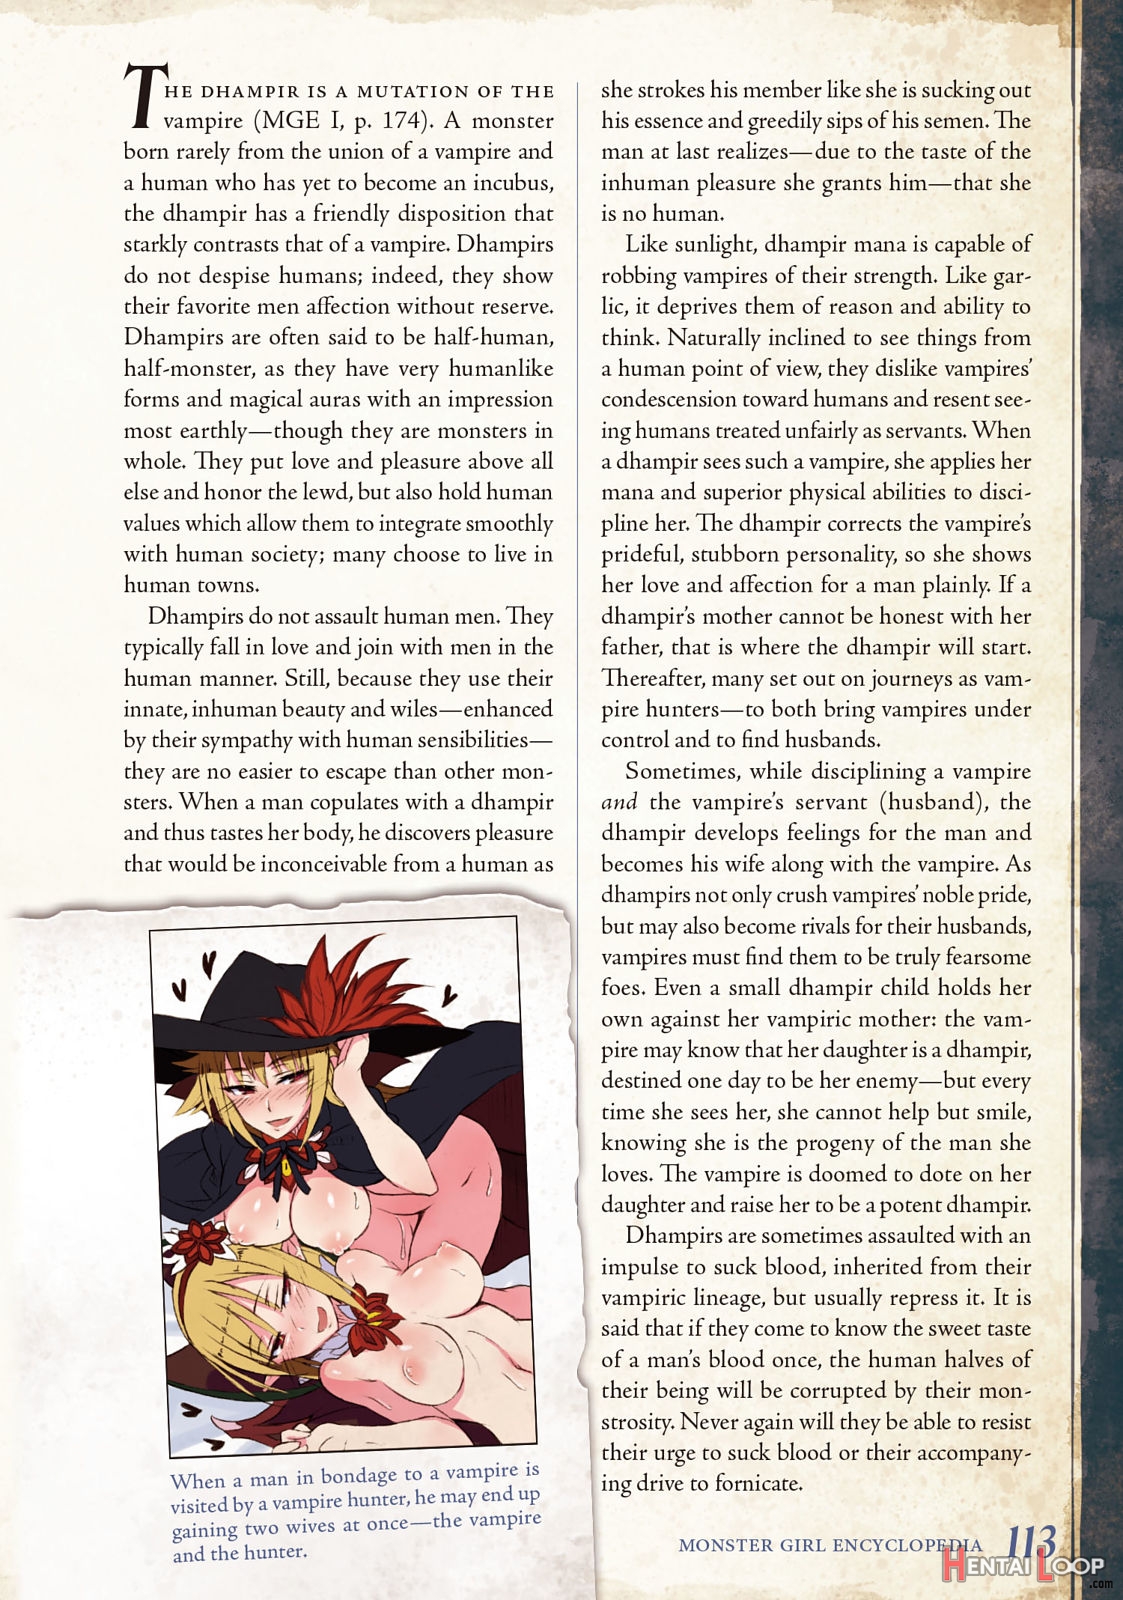 Monster Girl Encyclopedia Vol. 2 page 114